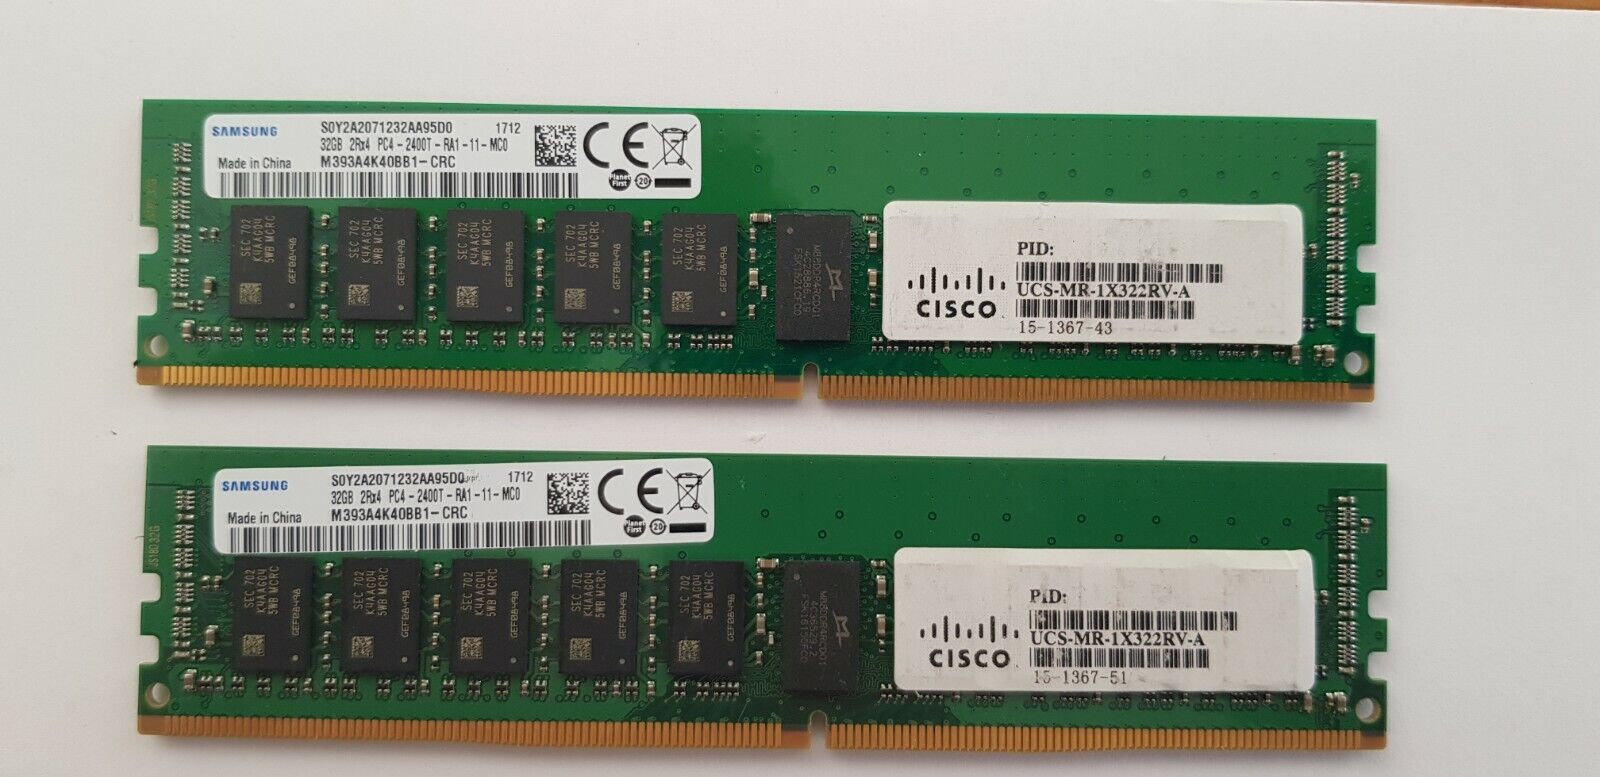 Cisco UCS-MR-1X322RV-A 32GB DDR4 2.4Mhz PC4-19200 Server Memory